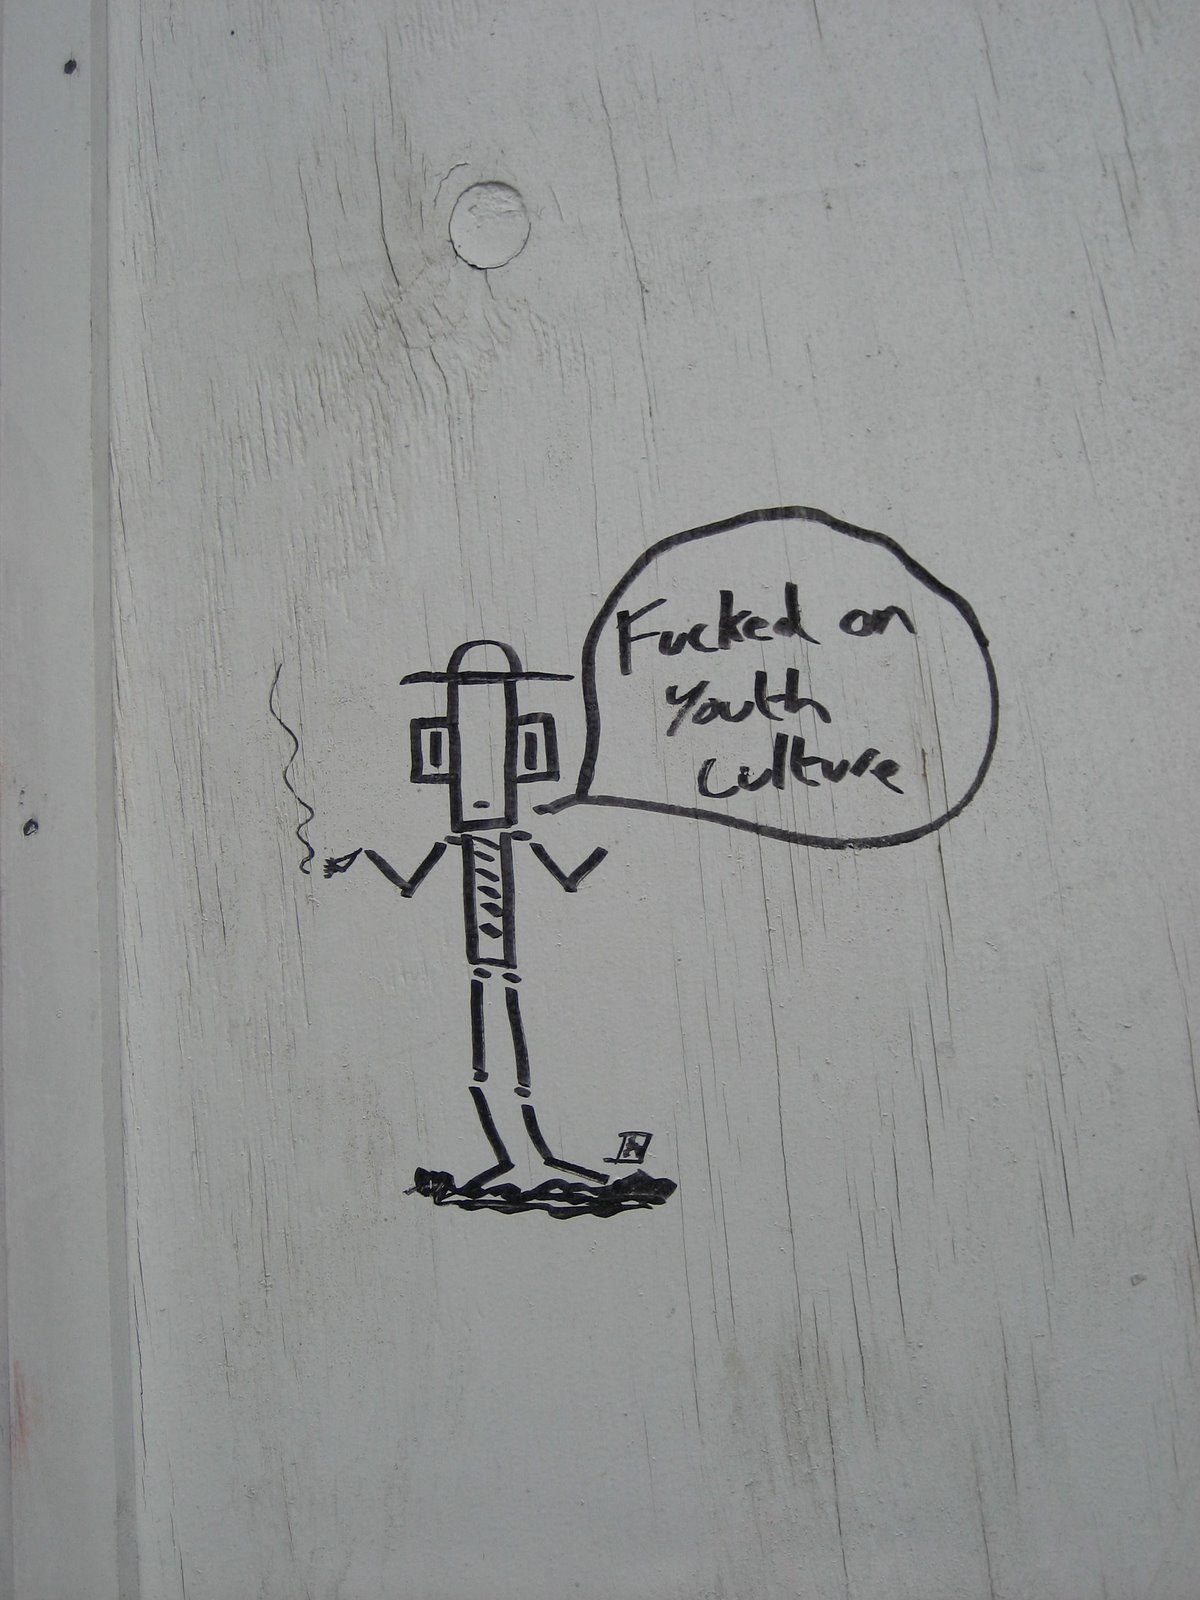 swindon street art fucked on youth culture